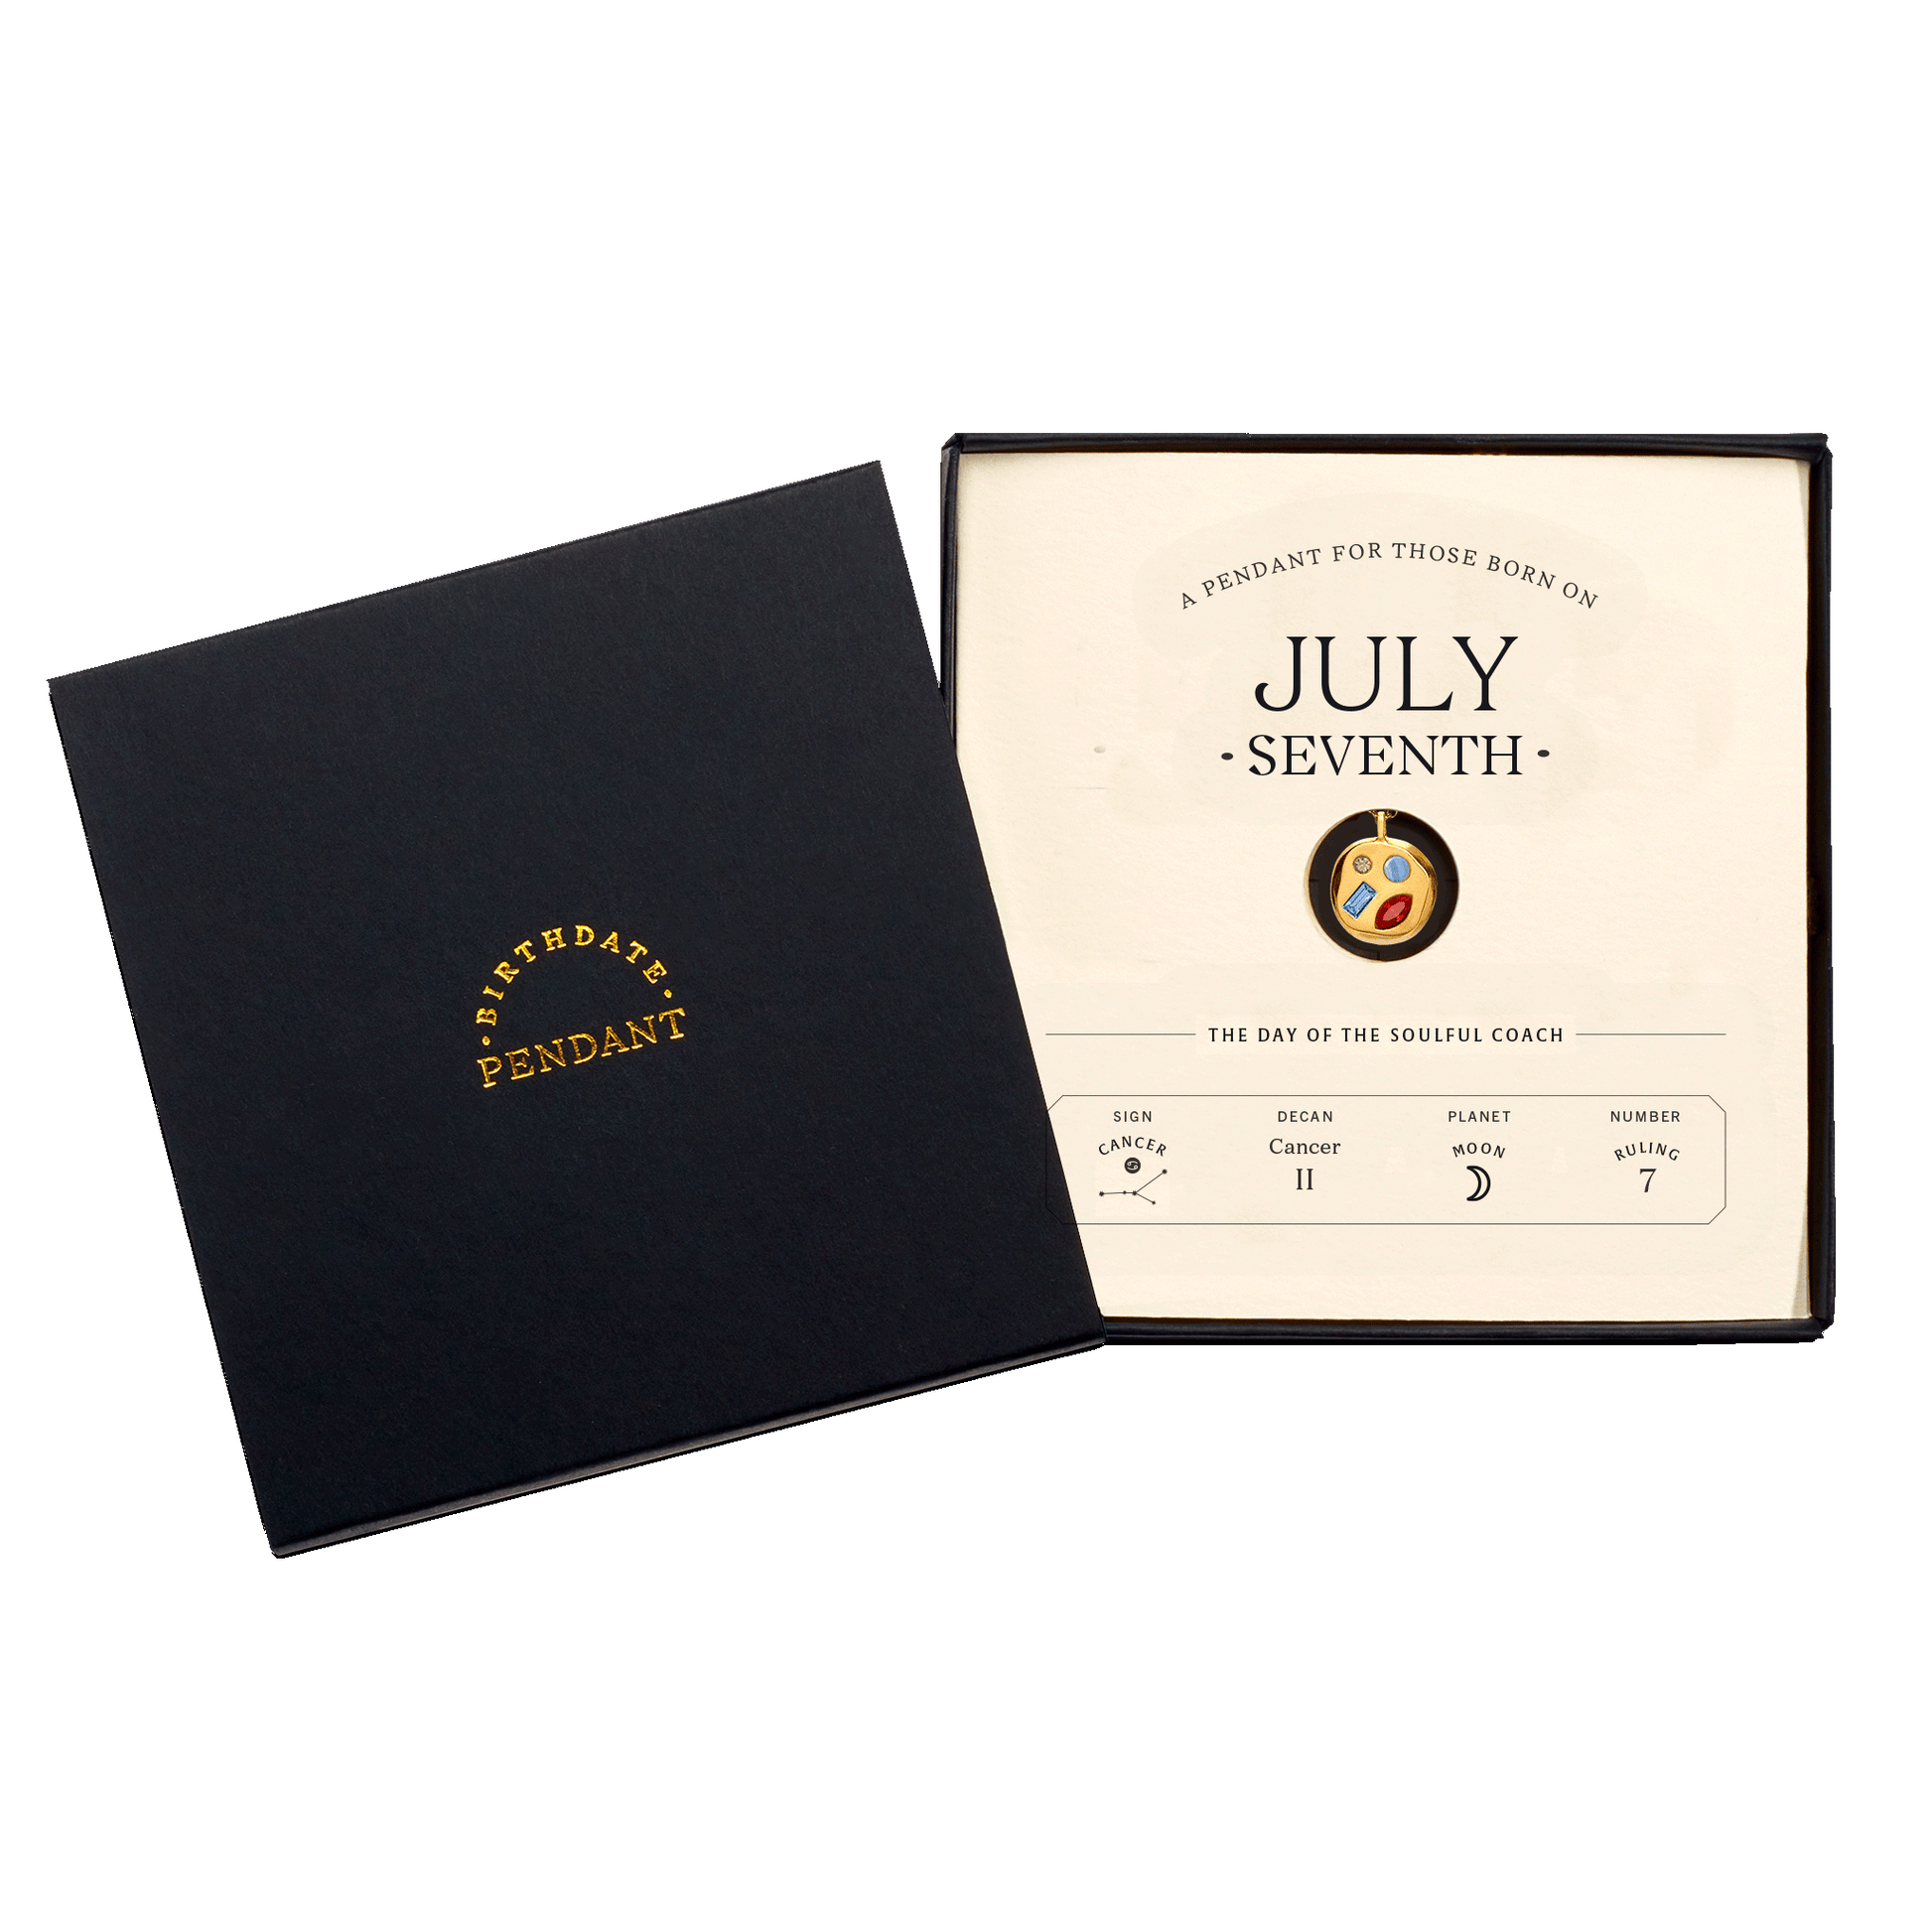 The July Seventh Pendant inside its box